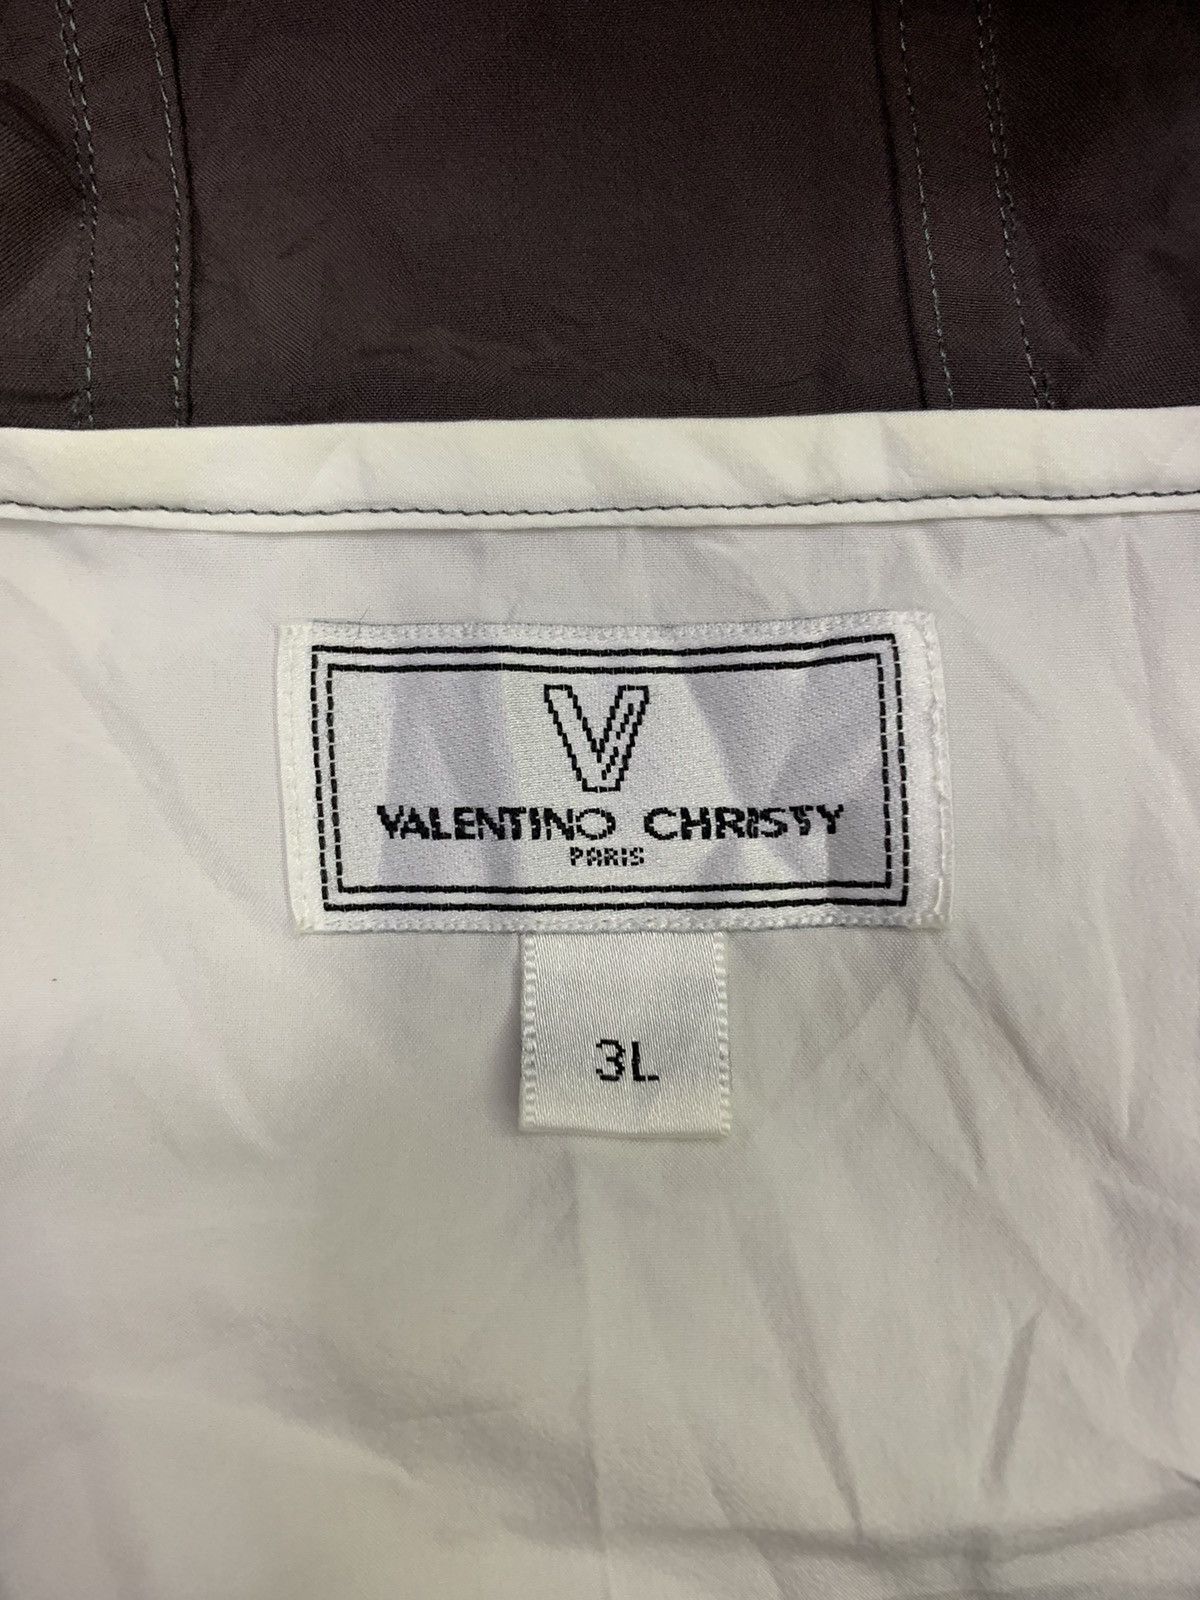 Vintage Valentino christy parkas Size US XXL / EU 58 / 5 - 5 Preview